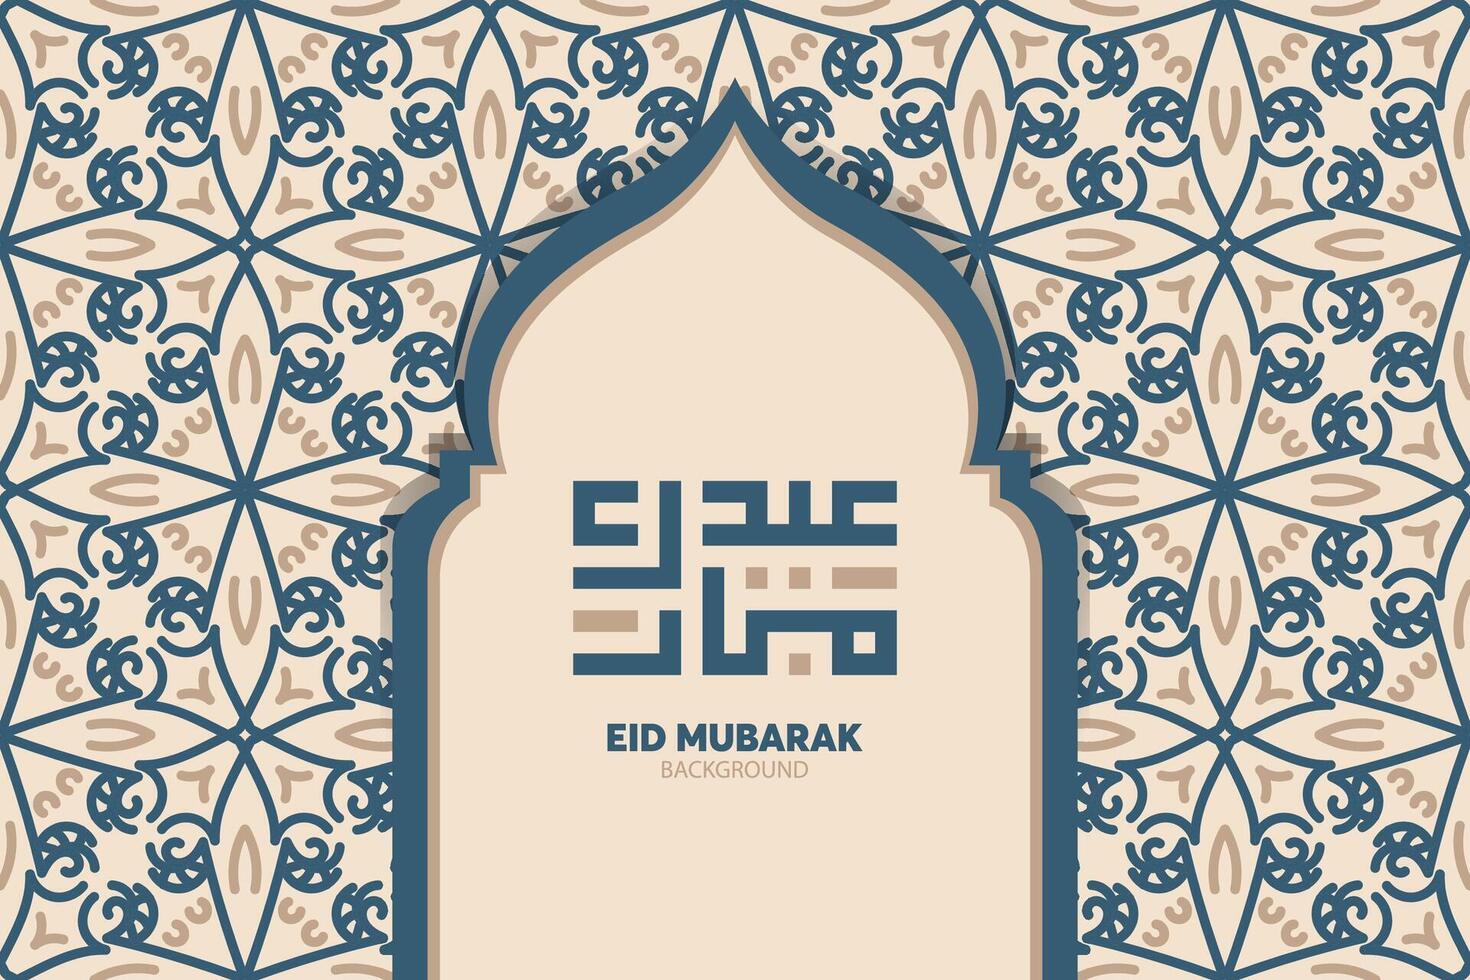 conception islamique eid mubarak et calligraphie arabe vecteur